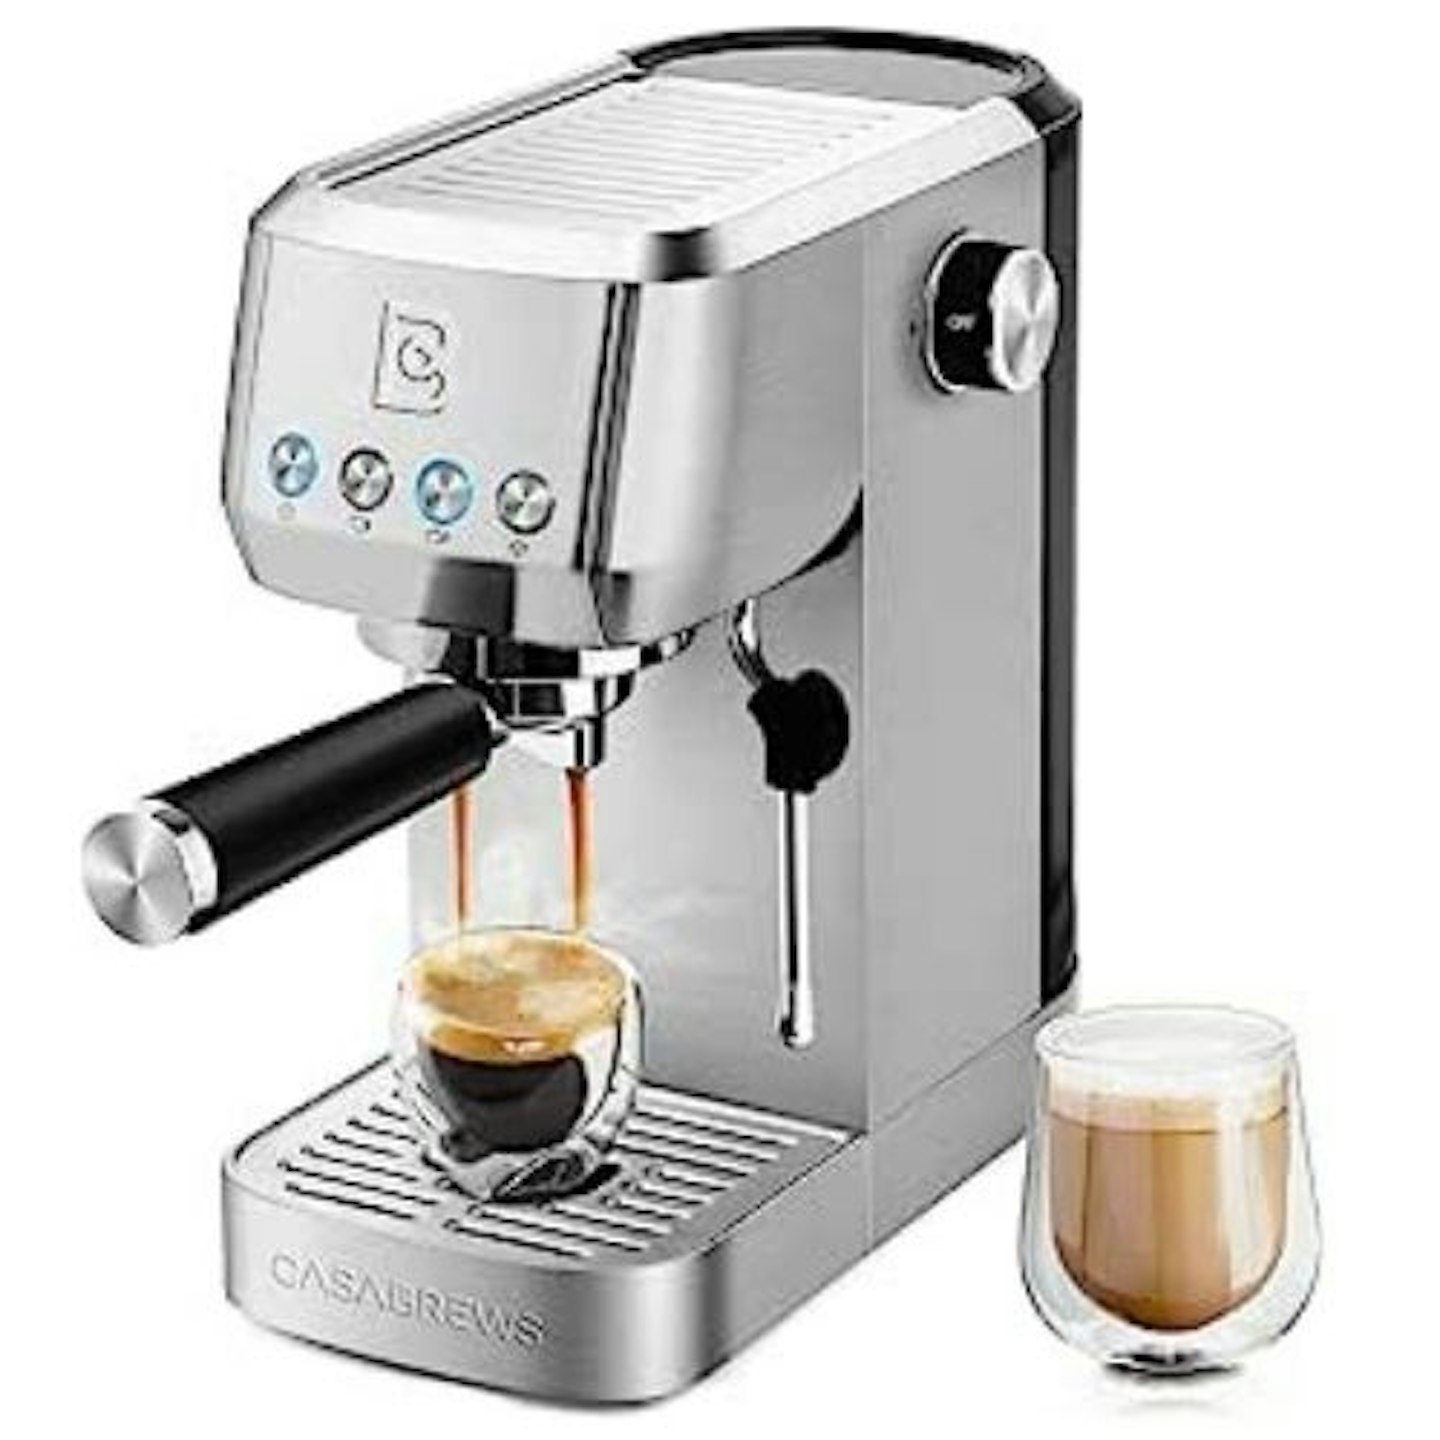 CASABREWS Compact Espresso Machine